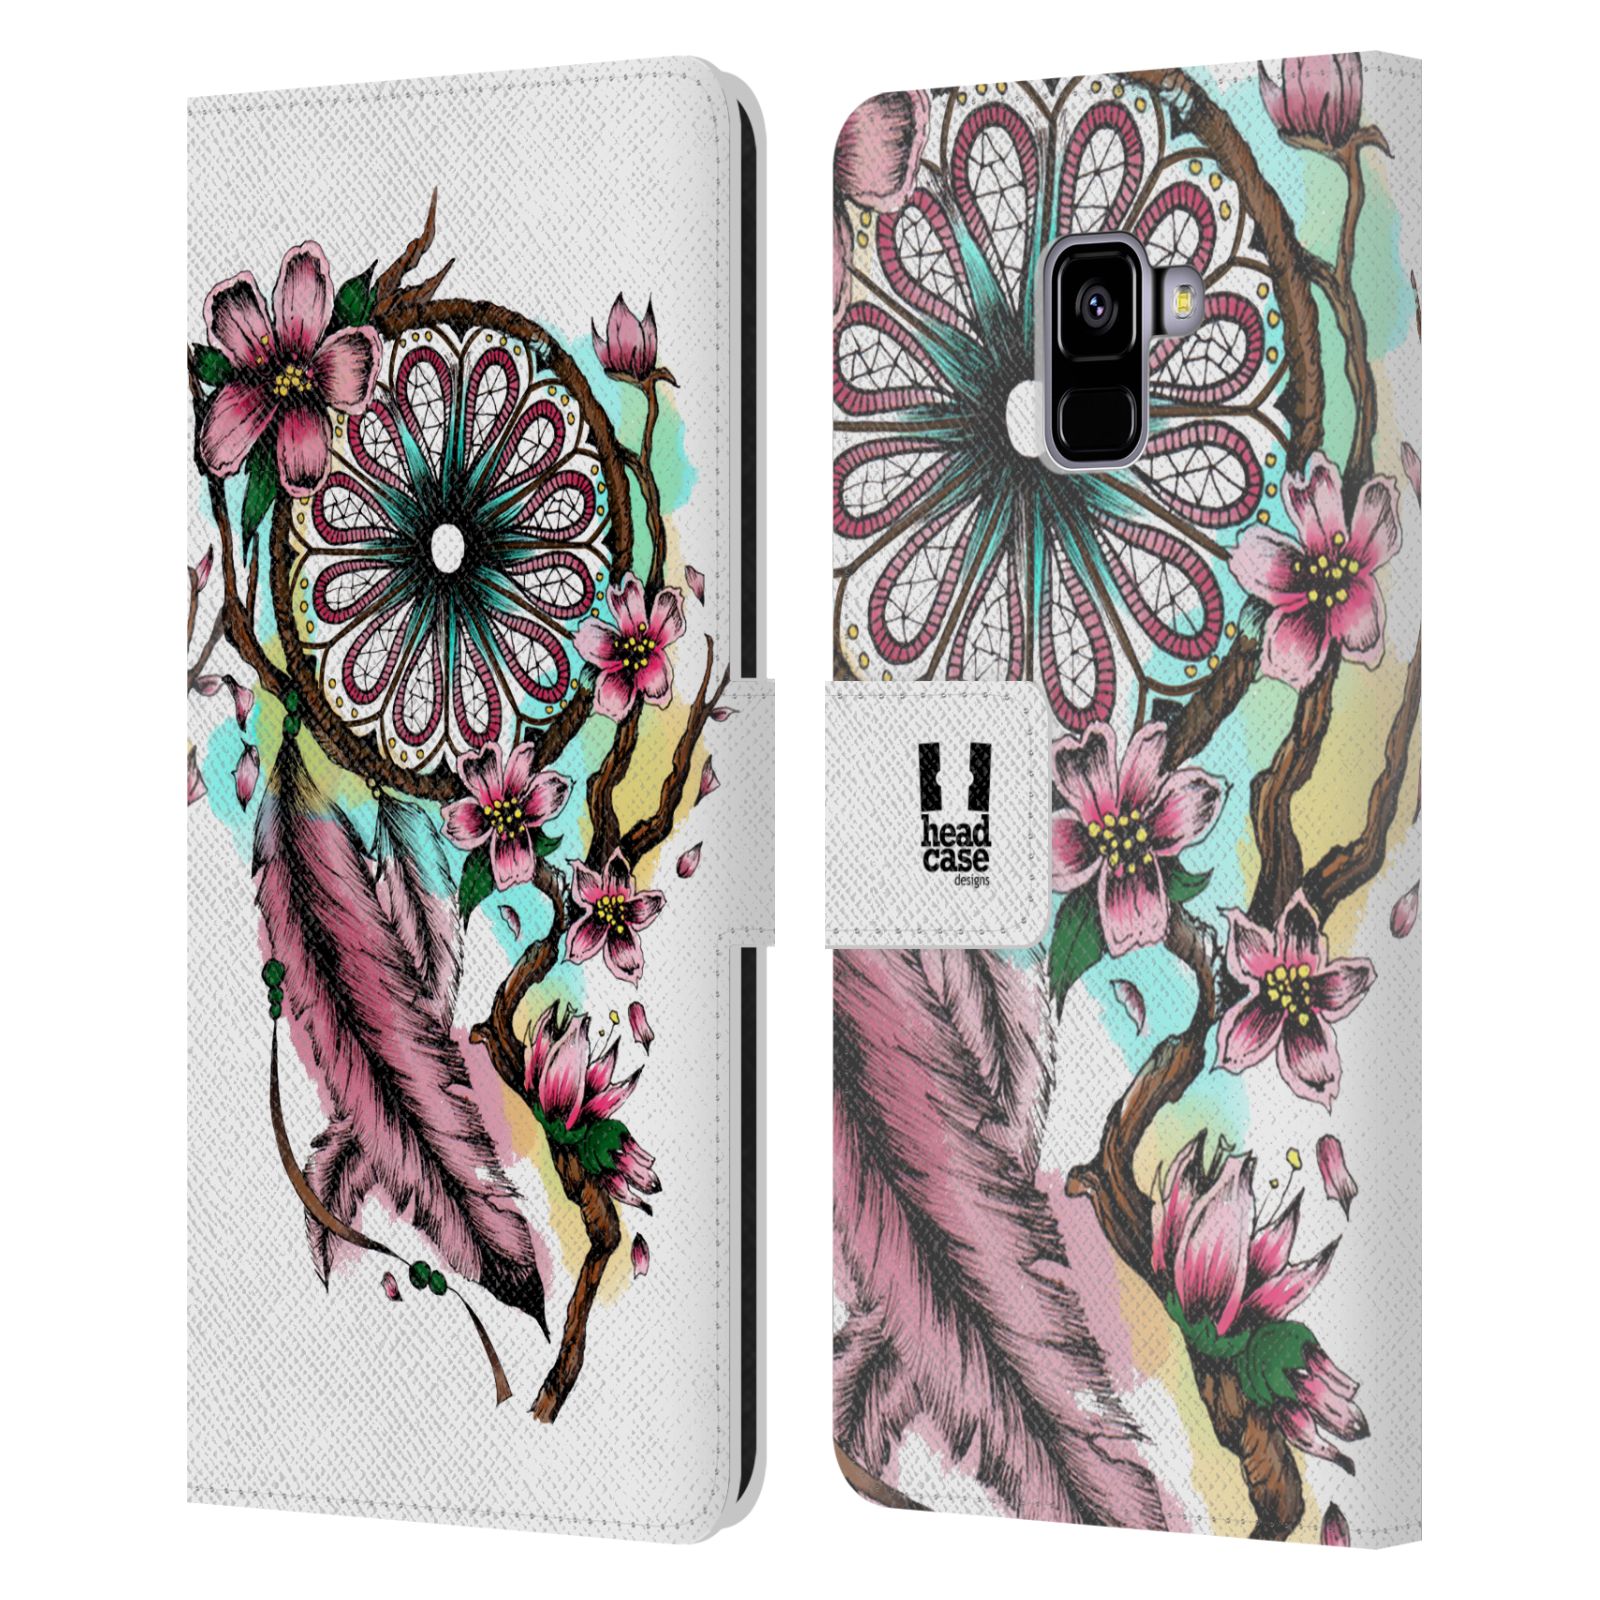 Pouzdro pro mobil Samsung Galaxy A8+ 2018 - Květinový vzor lapač snů